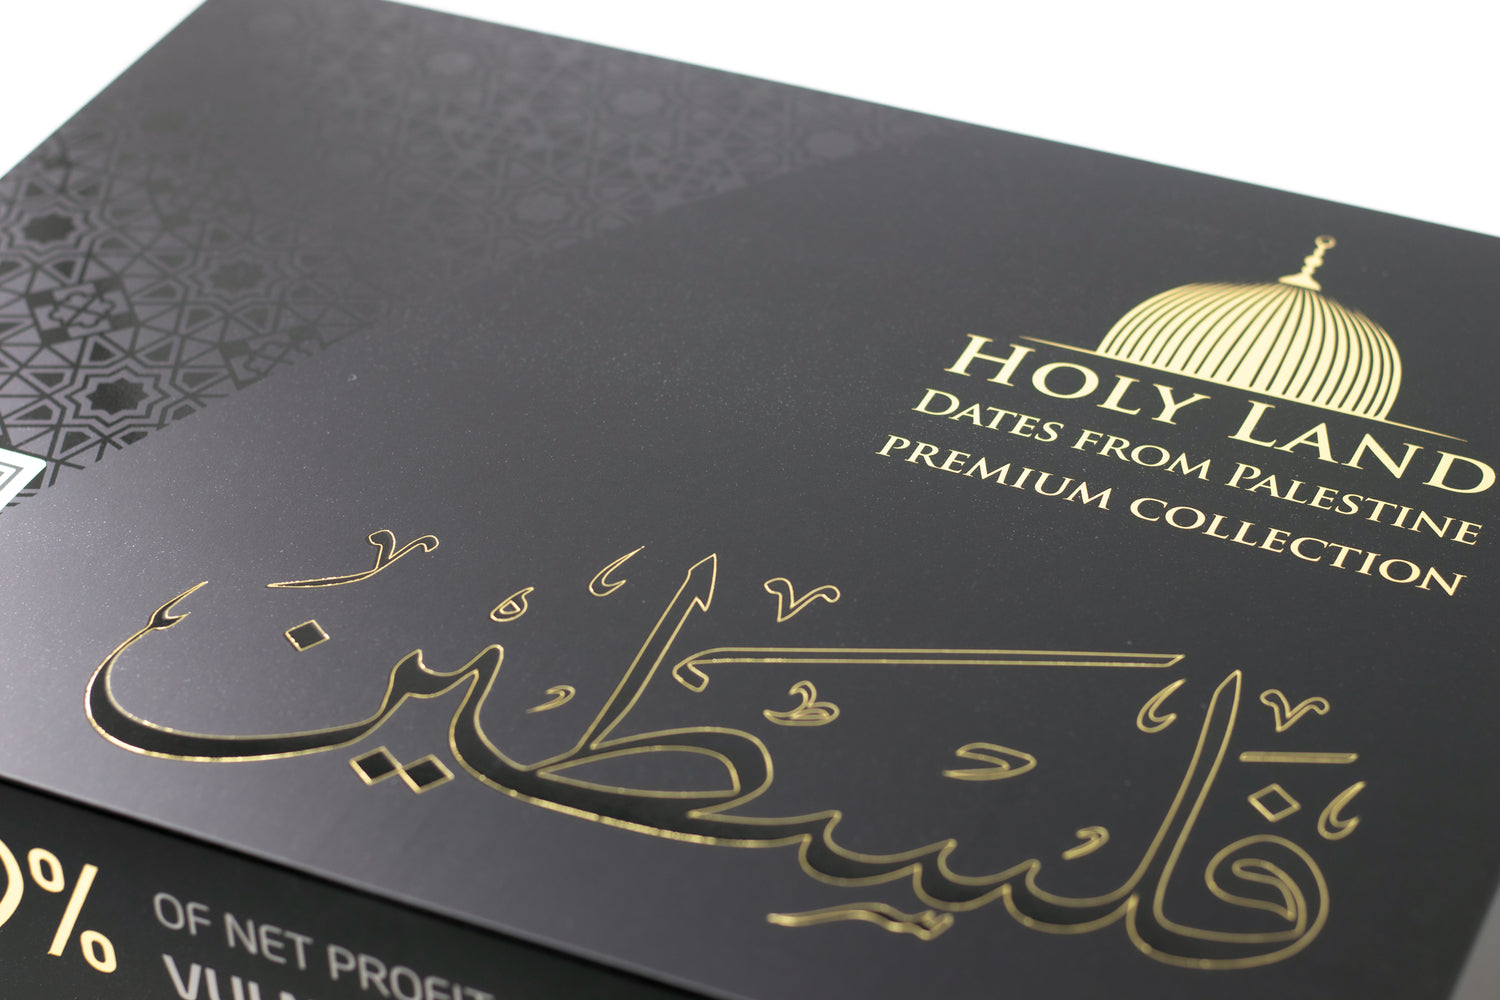 Holy Land Dates Premium Medjool dates (large) – high quality natural Medjool dates from Palestine